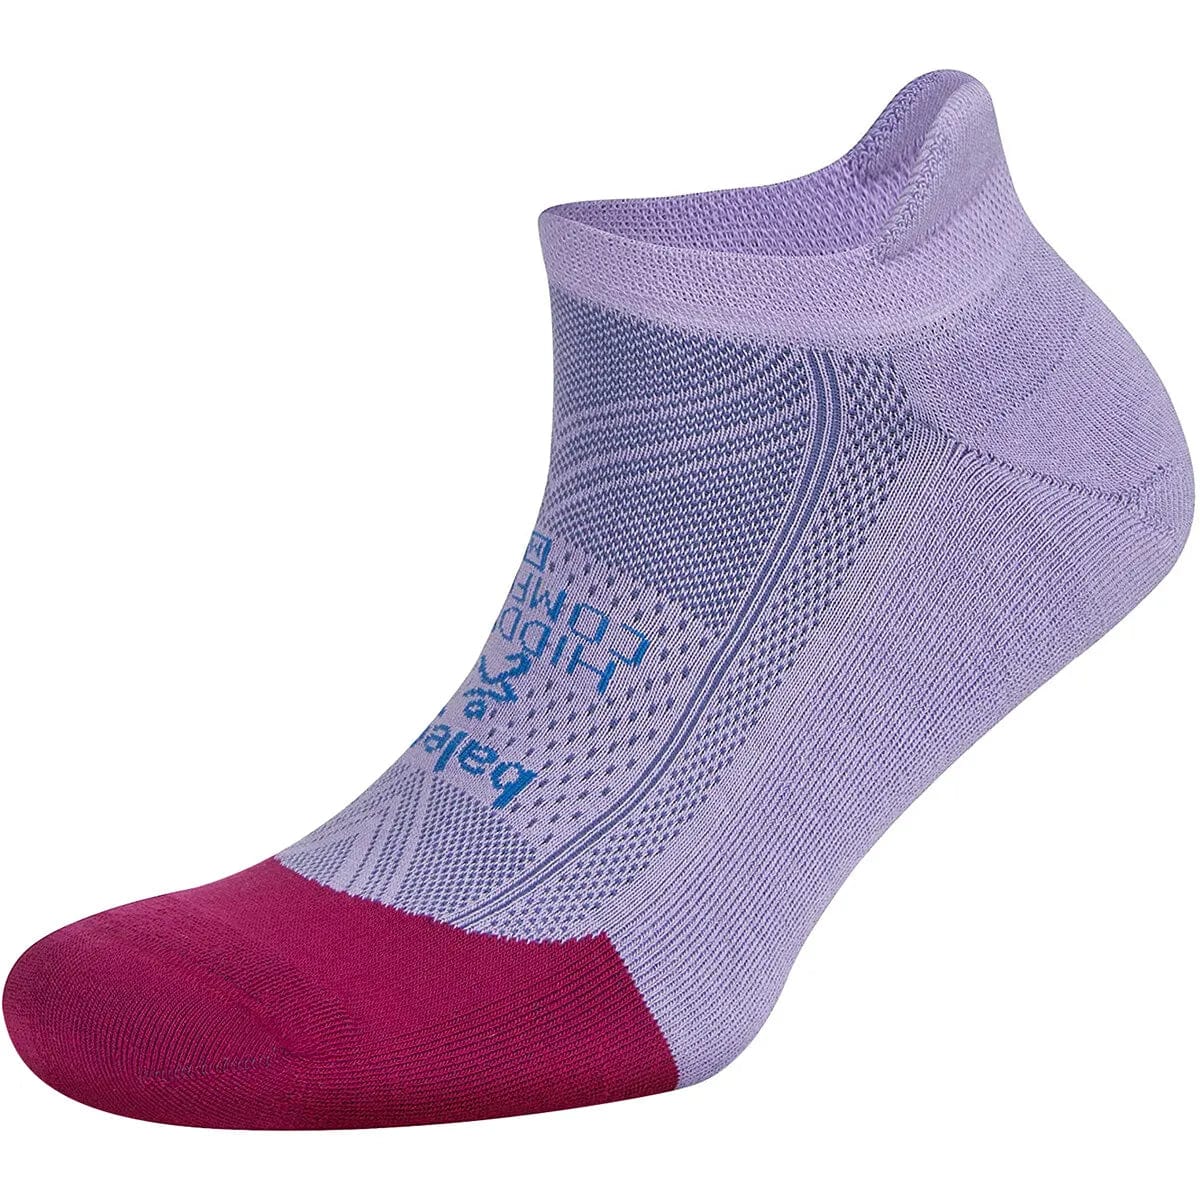 Balega Hidden Comfort No Show Tab Socks - Clearance  -  Small / Wildberry/Bright Lavender